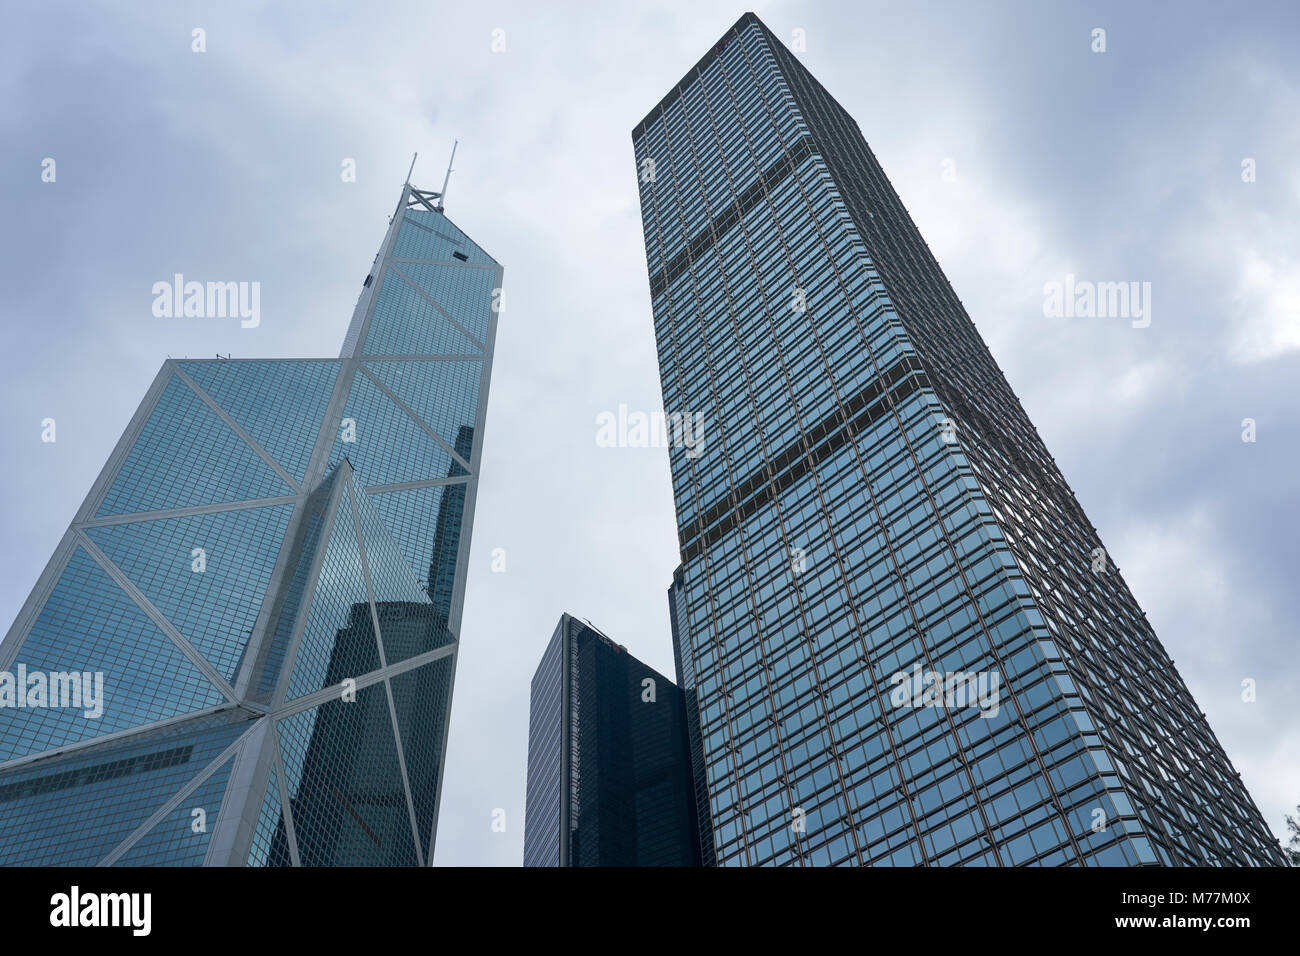 Bank of China Building and Cheung Kong Centre towers in Central, Hong Kong Island's financial district, Hong Kong, China, Asia Stock Photo